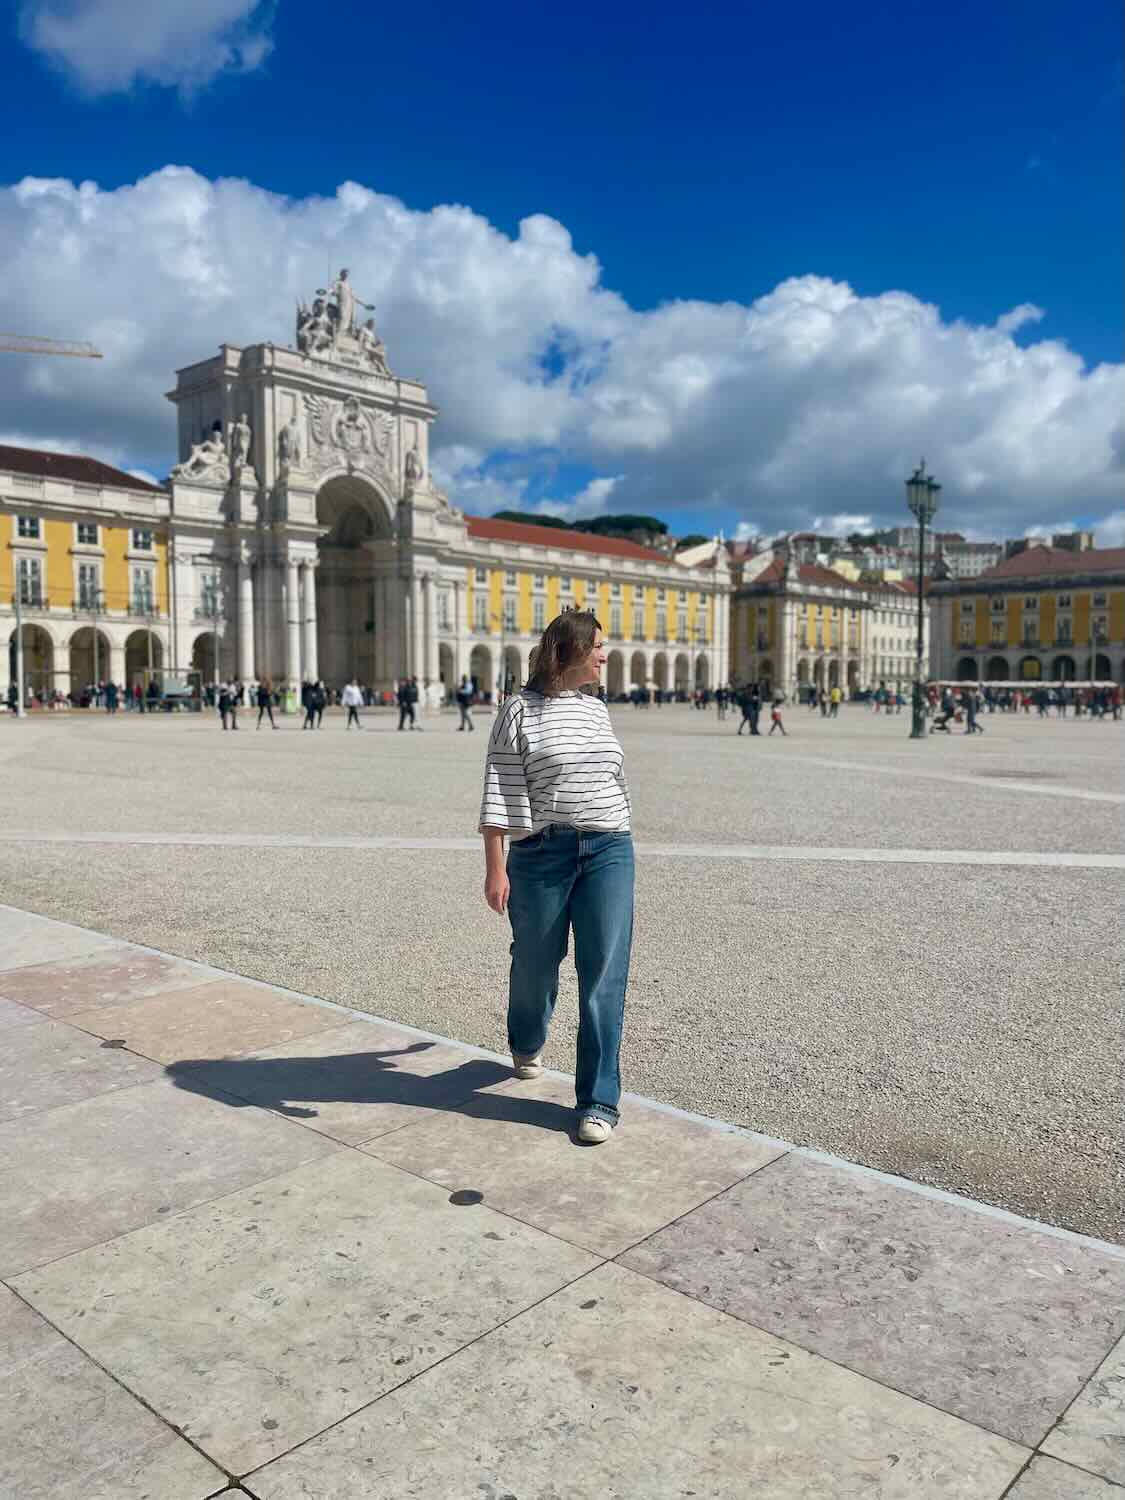 Solo traveler walking towards the grand Rua Augusta Arch in the Praça do Comércio under a clear blue sky in Lisbon, Portugal.